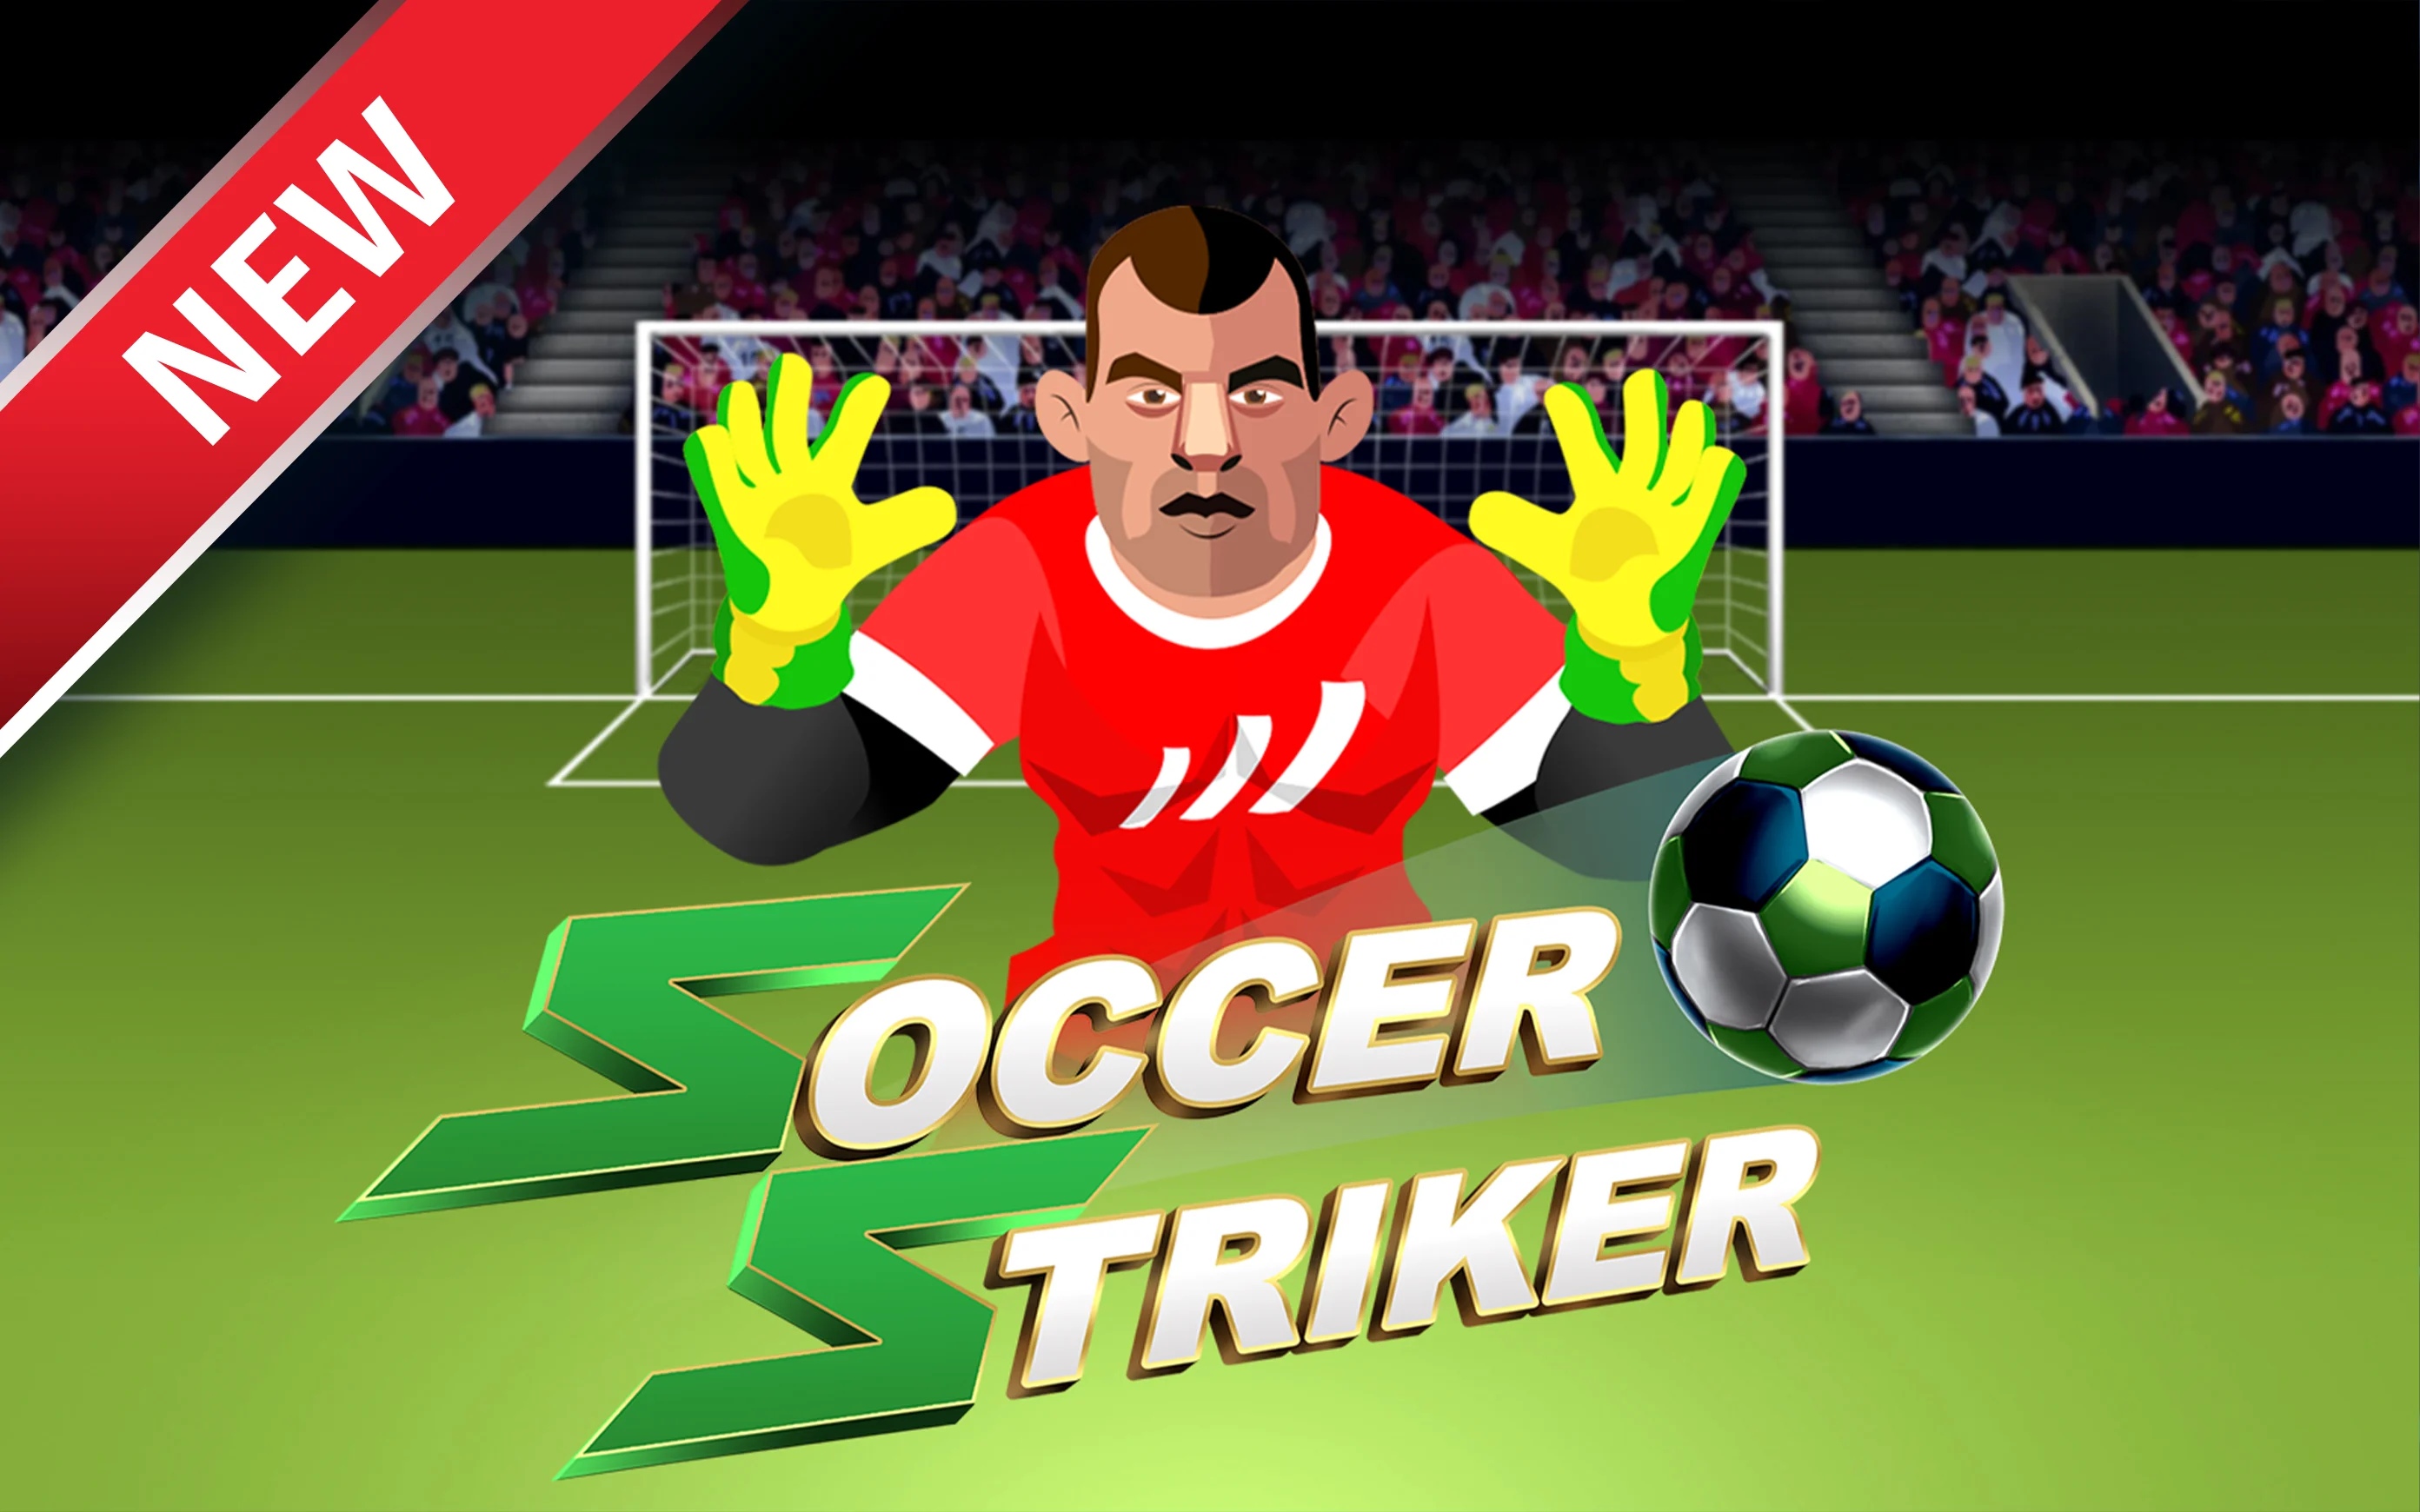 Play Soccer Striker on Starcasino.be online casino